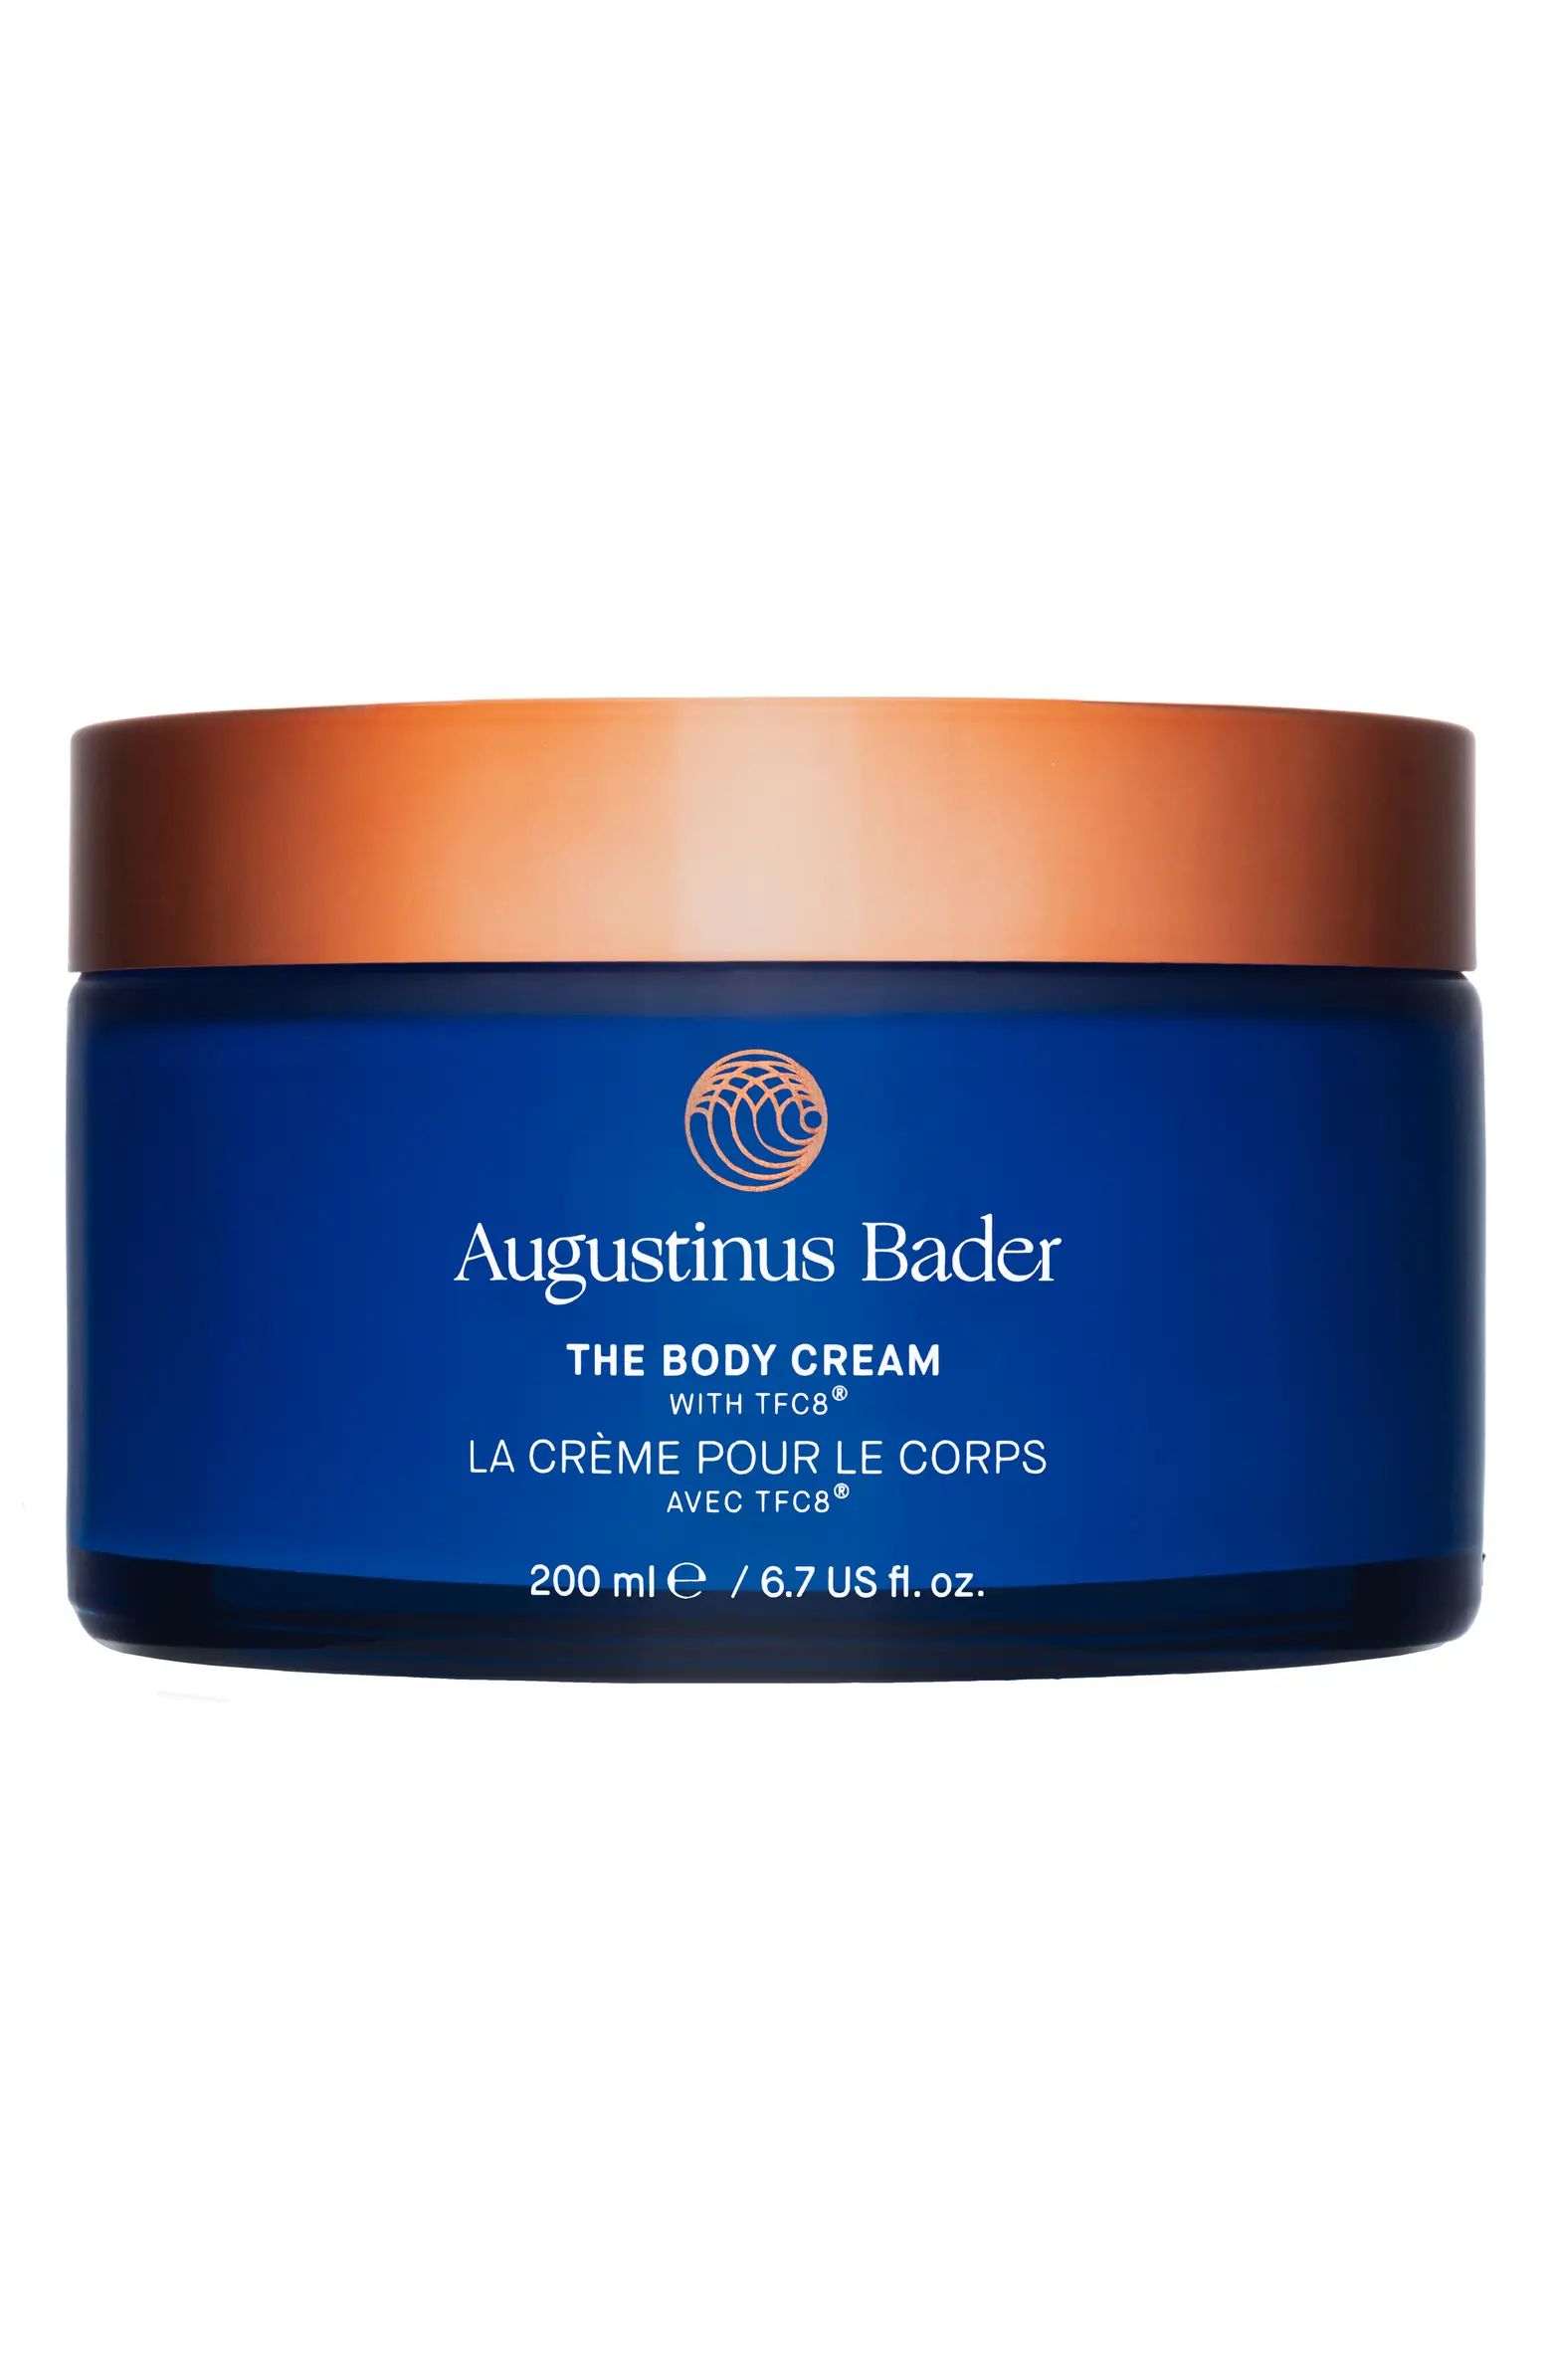 Augustinus Bader The Body Cream | Nordstrom | Nordstrom